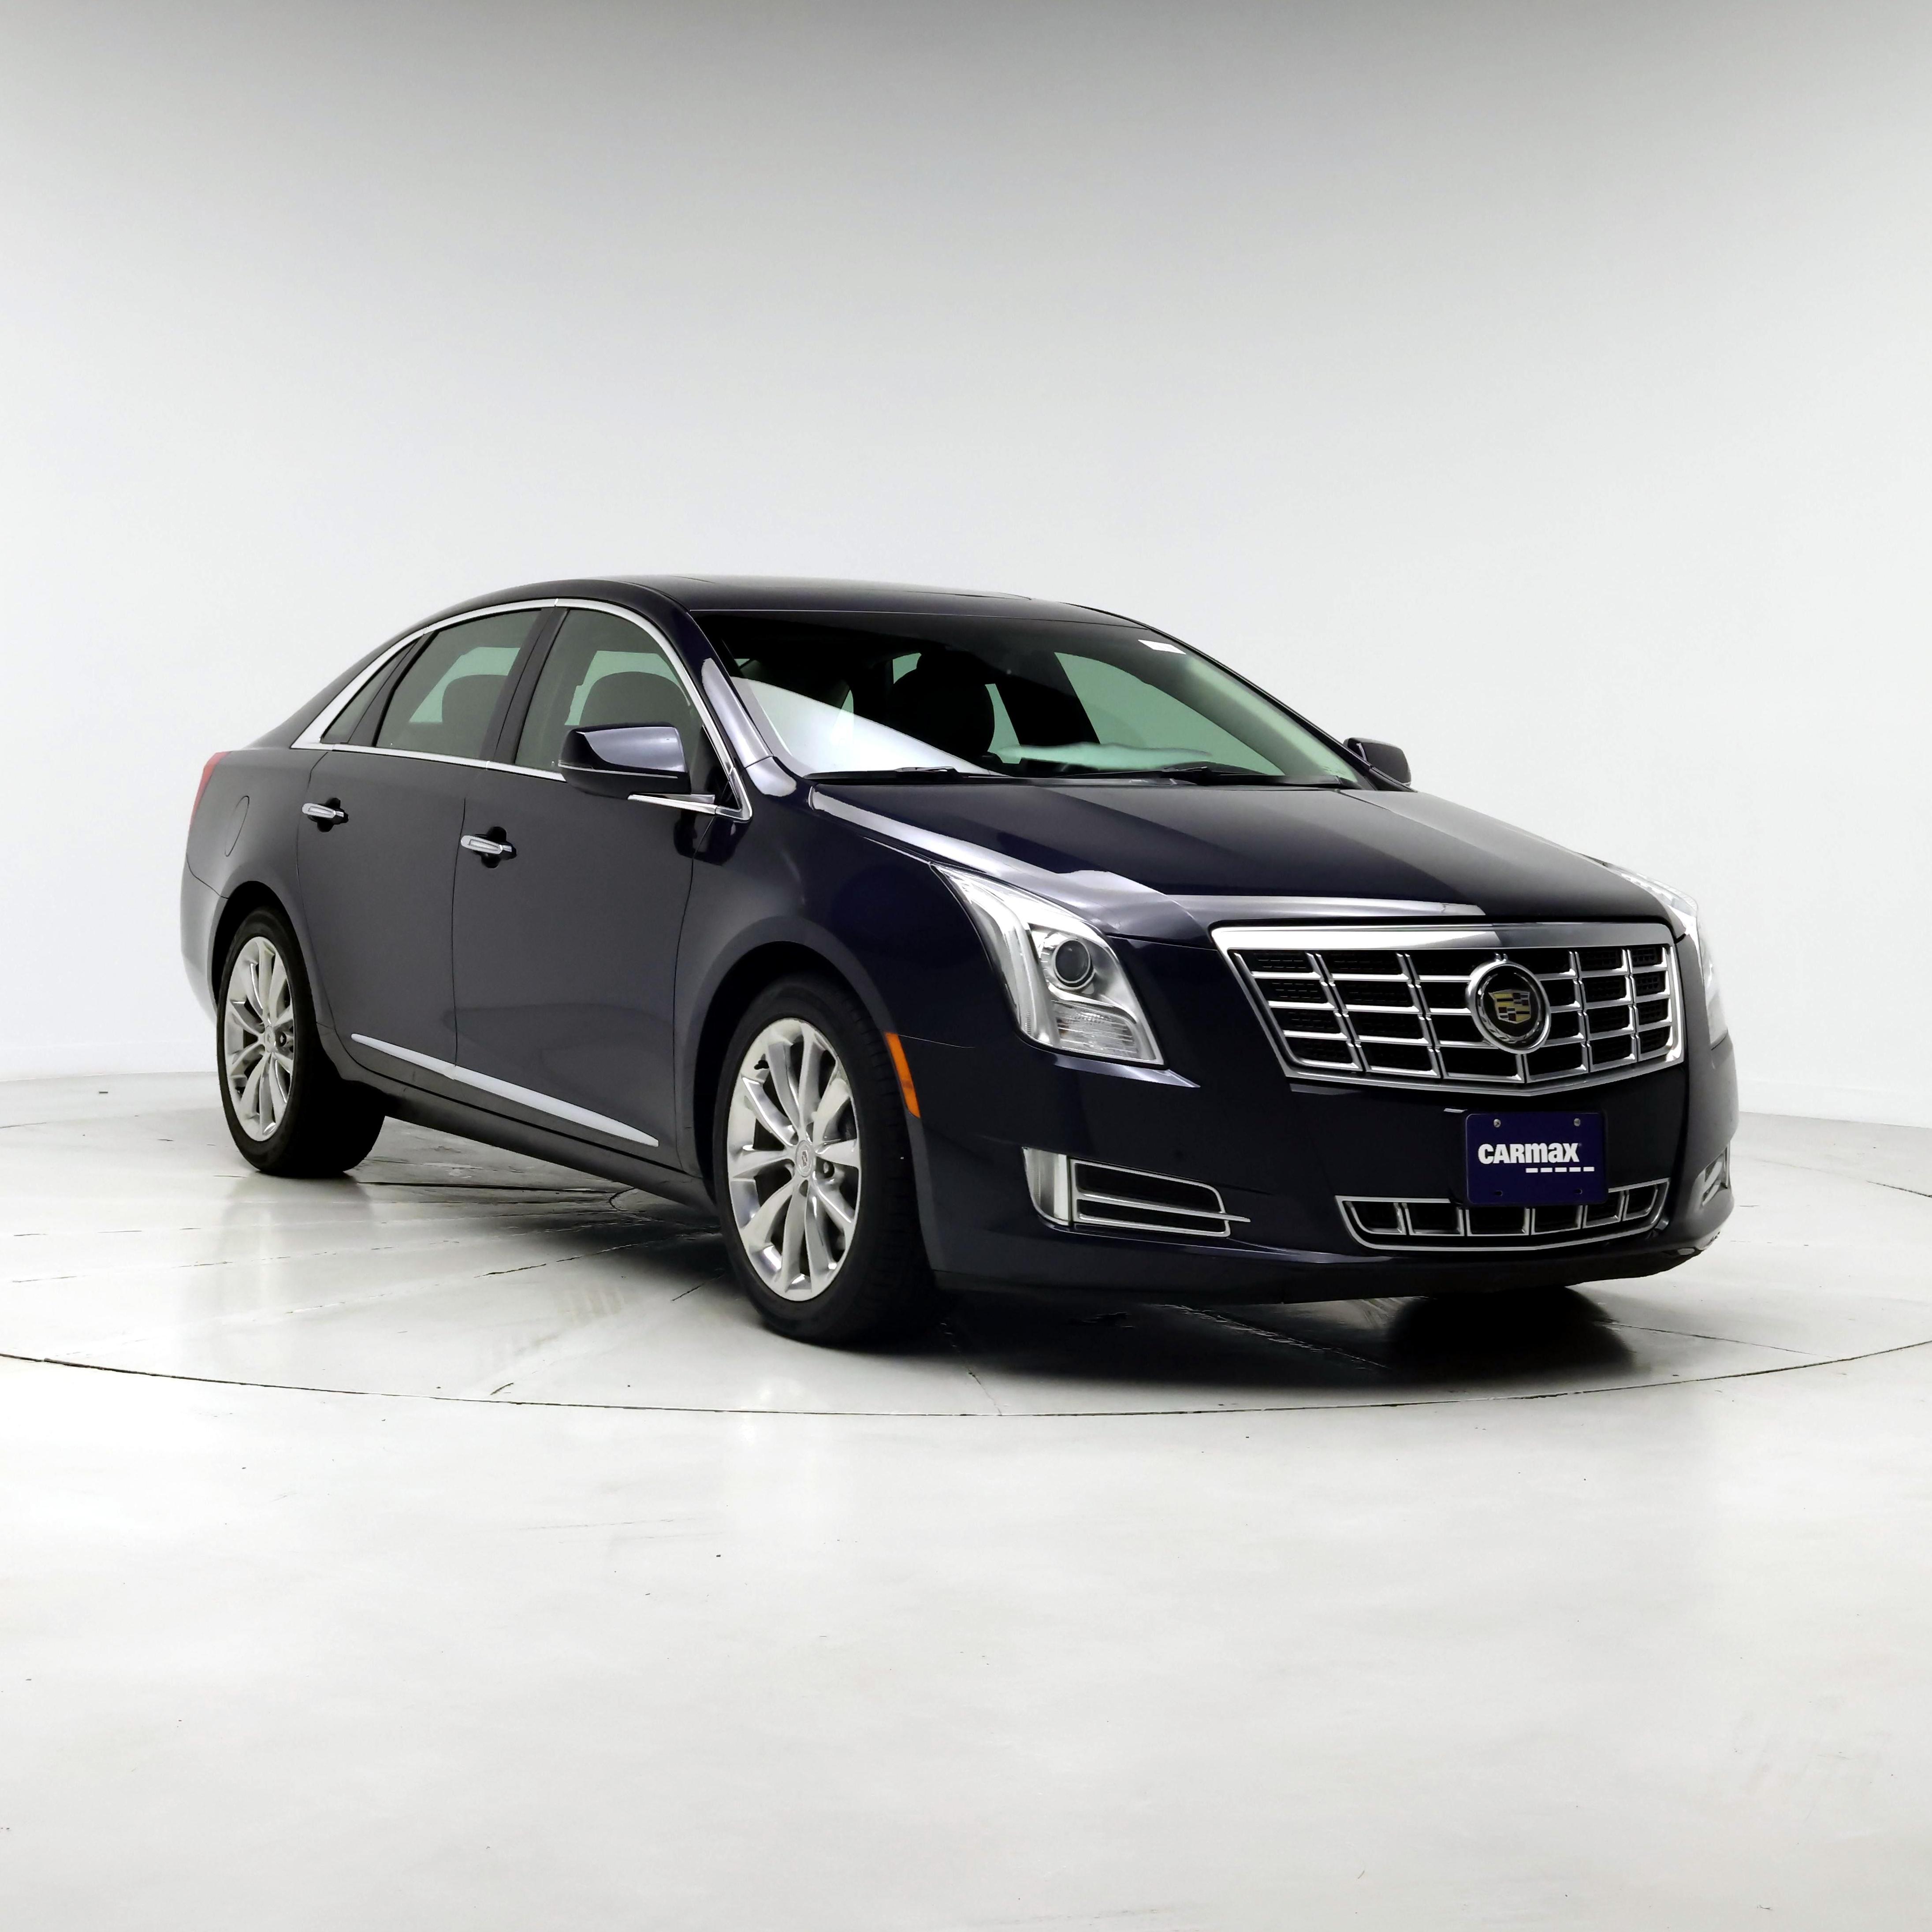 2013 Cadillac XTS Premium FWD